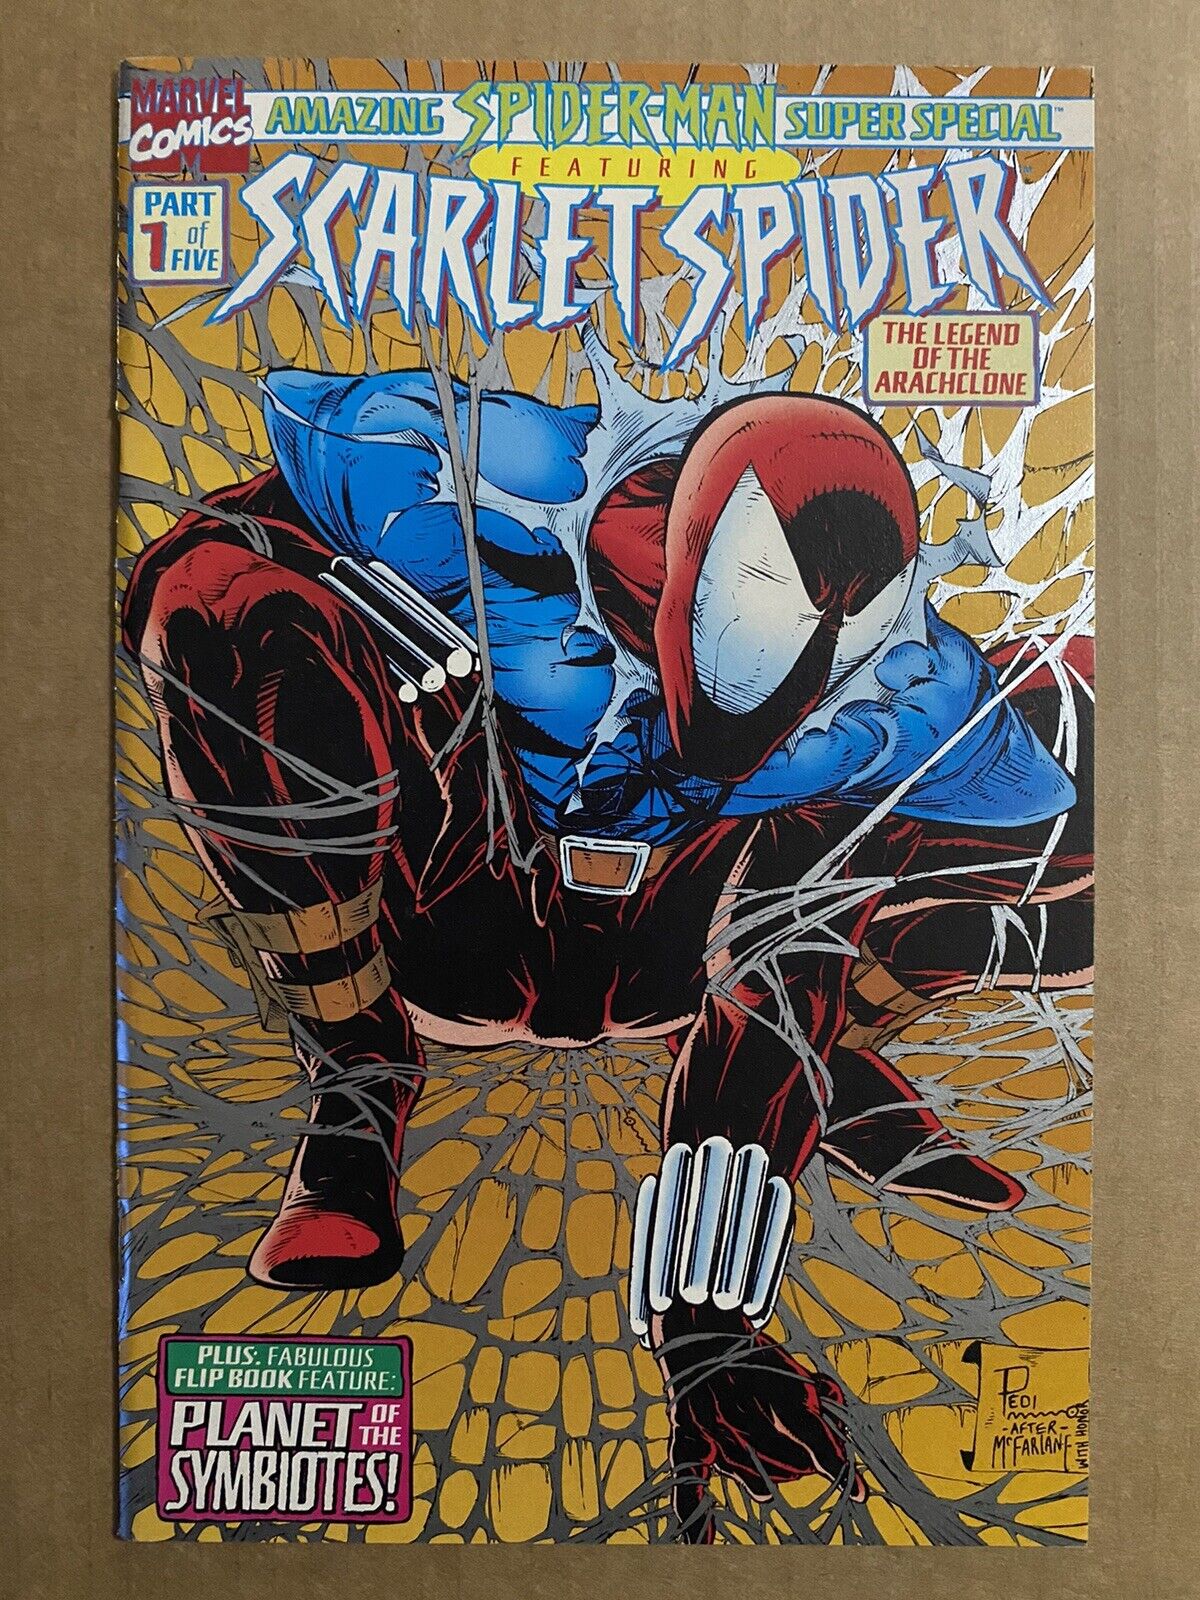 Amazing Spiderman Scarlet Spider #1 Marvel Comic Book